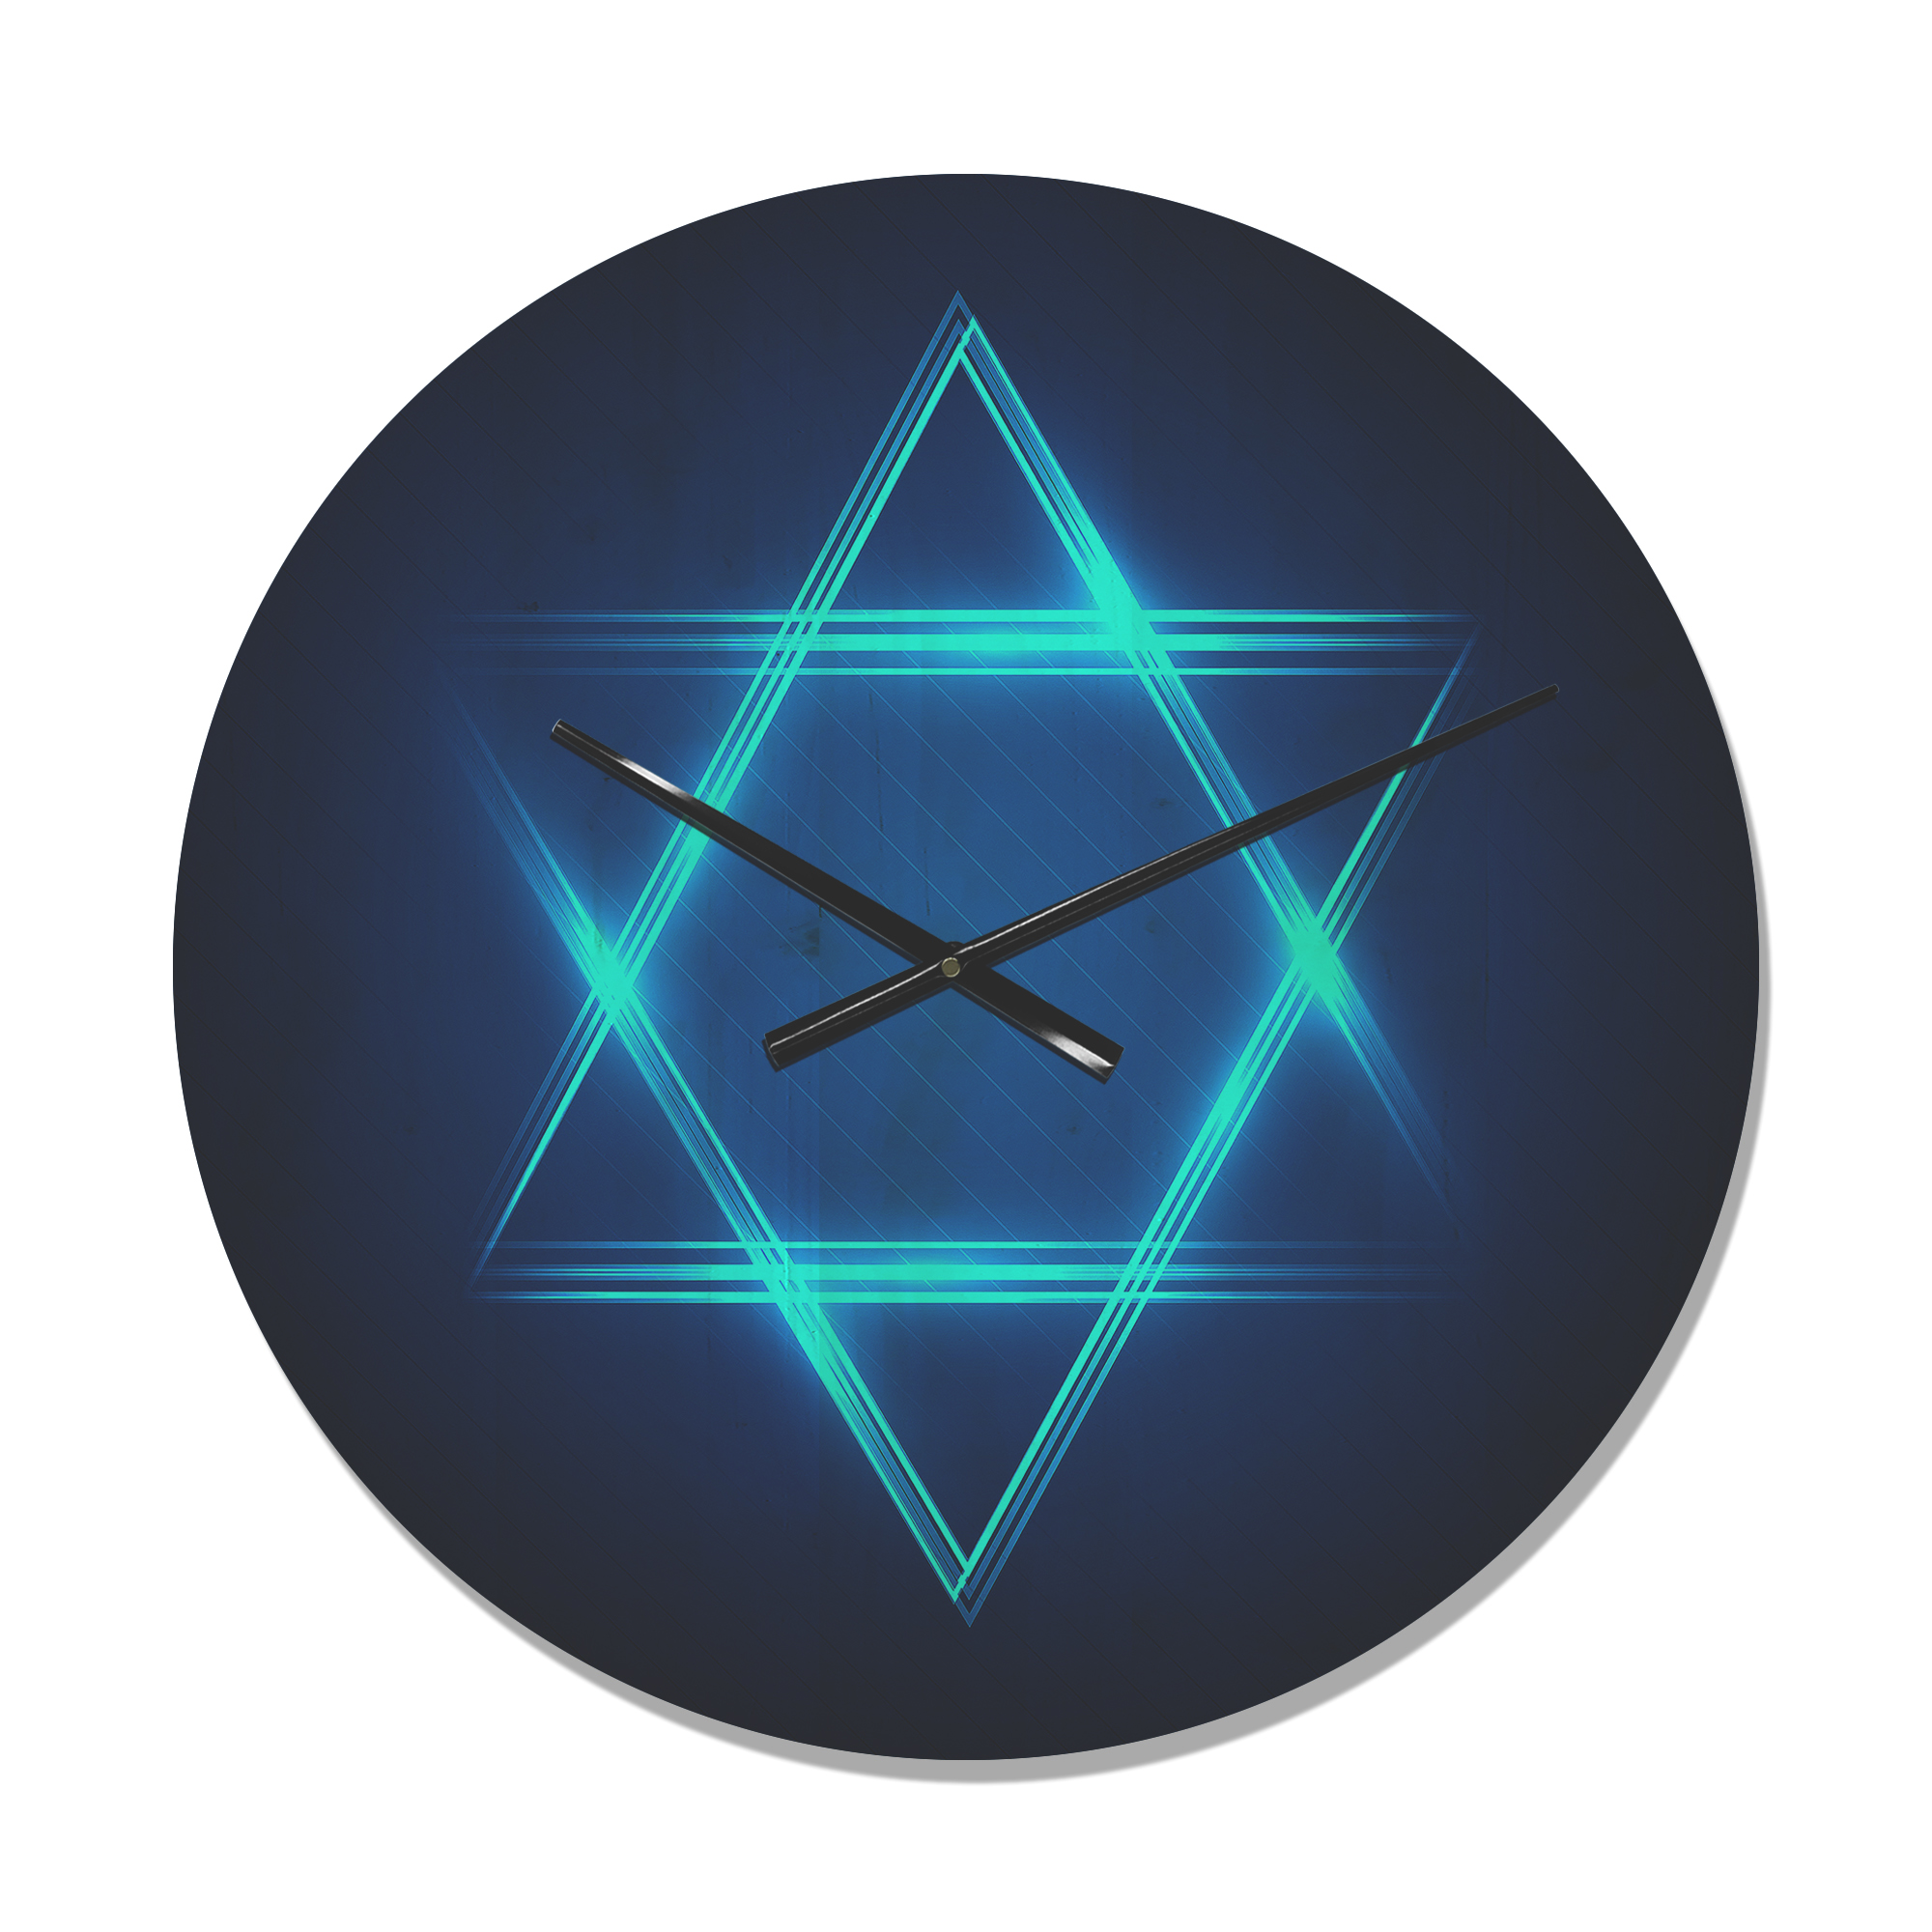 Designart 'Blue Neon Star of David' Modern Wood Wall Clock - image 1 of 5